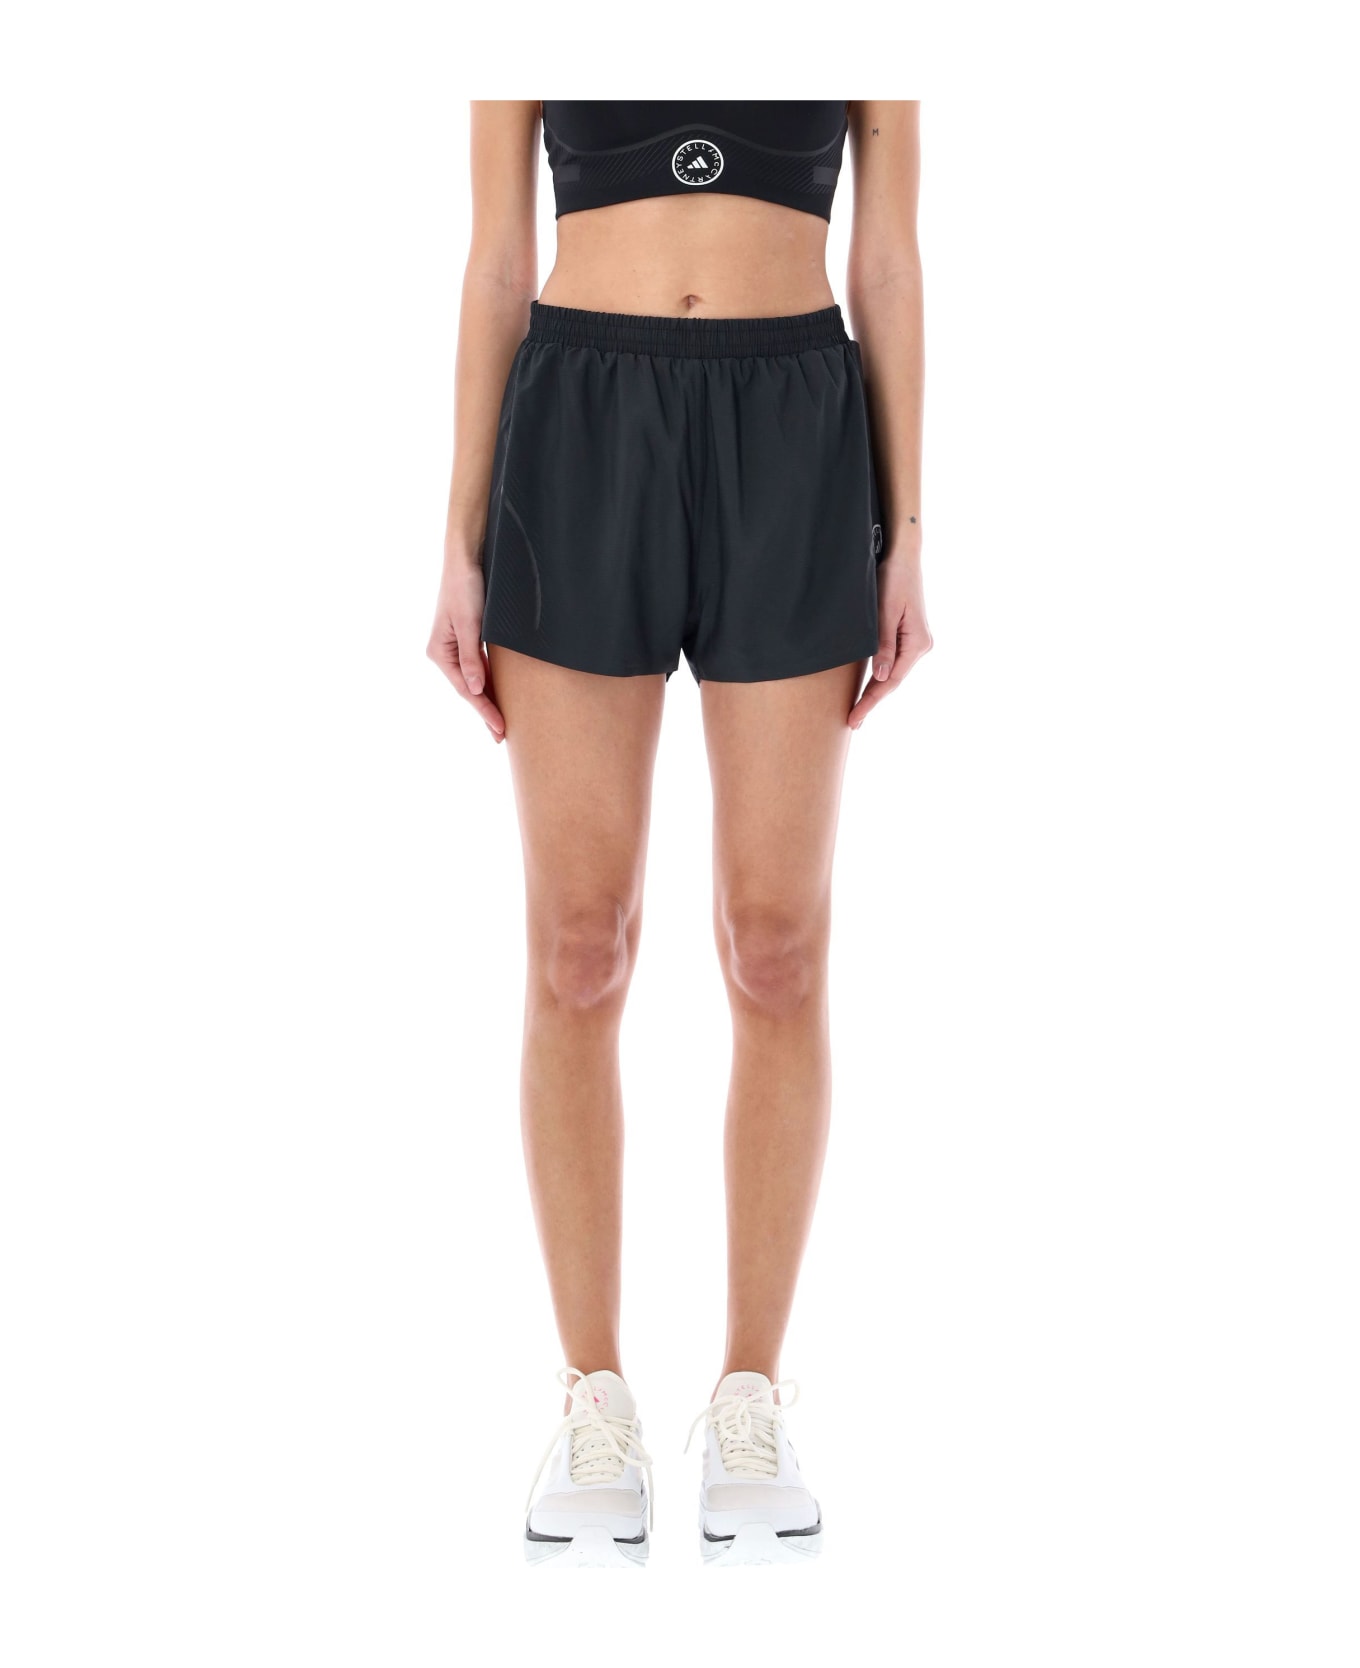 Adidas by Stella McCartney Truepace Running Shorts - BLACK